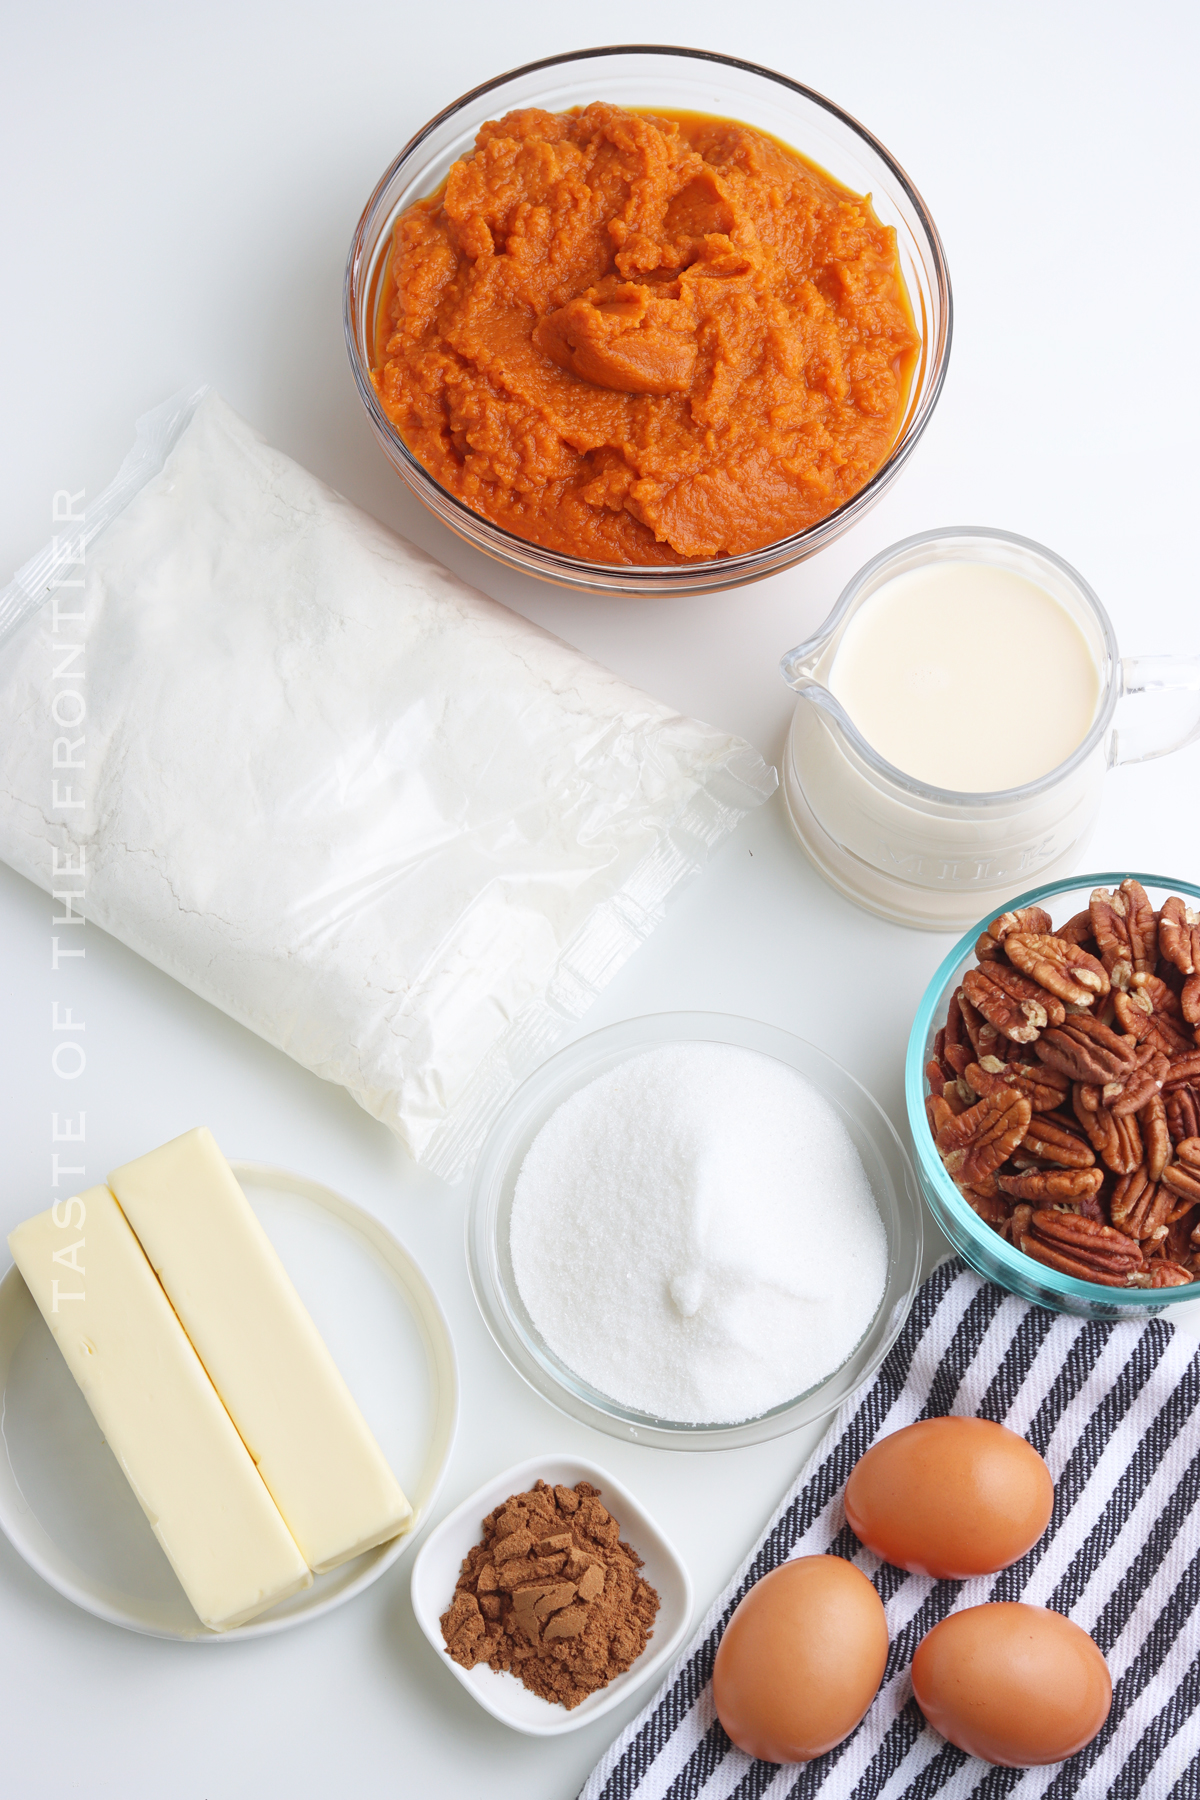 Ingredients for Pumpkin Dump Cake